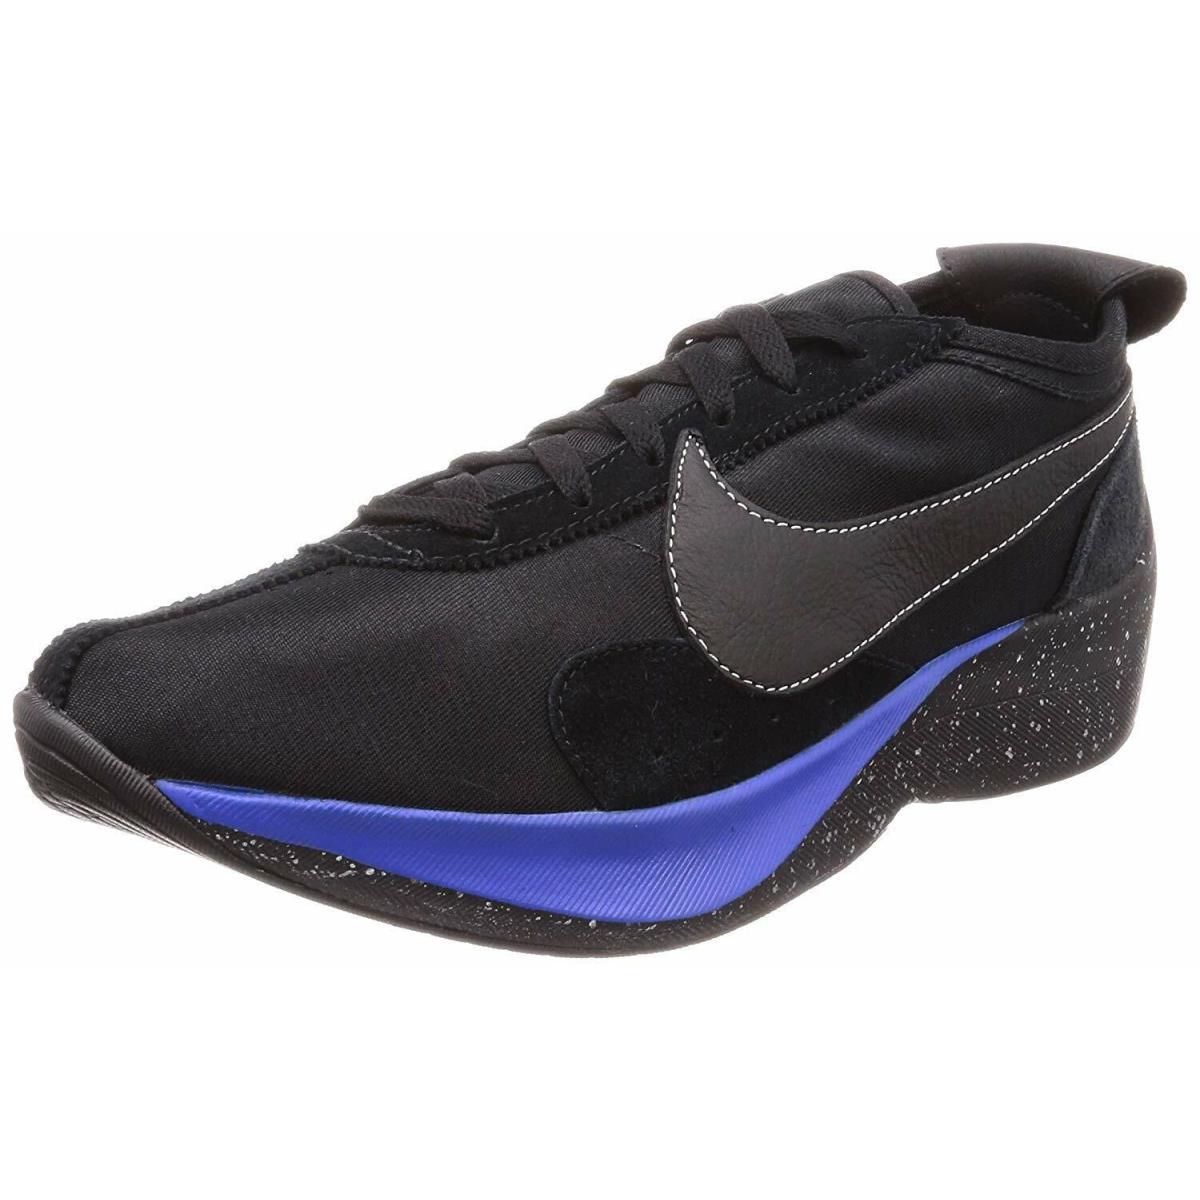 Nike Moon Racer QS Mens Running Shoes BV7779 001 Size 11 in The Box - Black/Black-White Racer Blue